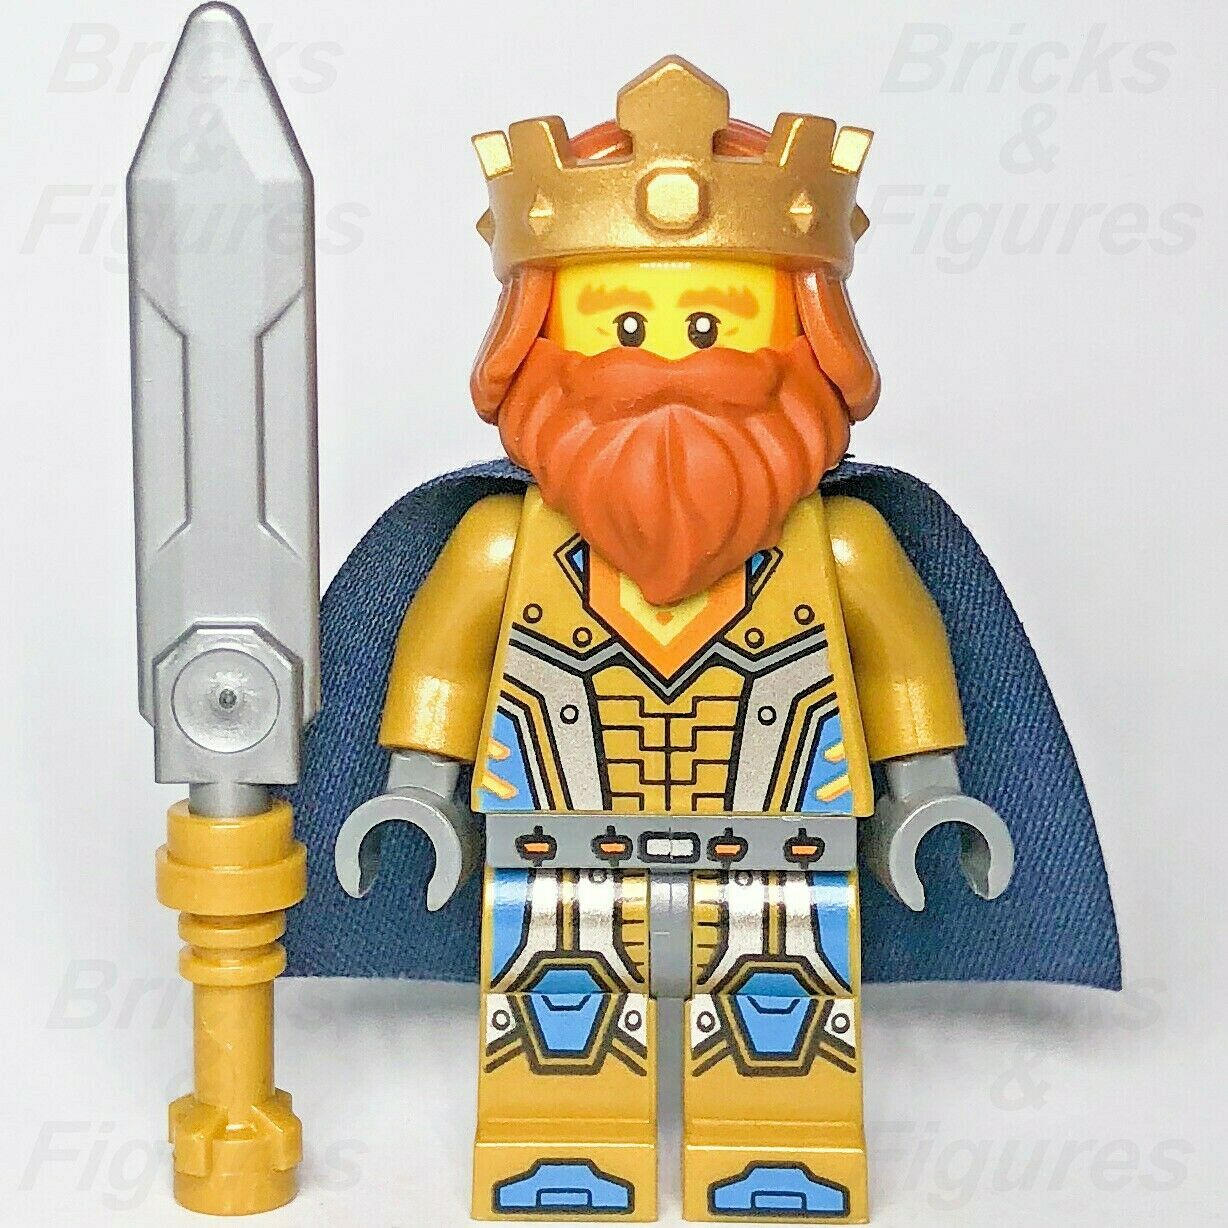 New Nexo Knights LEGO King Halbert with Sword & Cape Minifigure 70327 nexo014 - Bricks & Figures